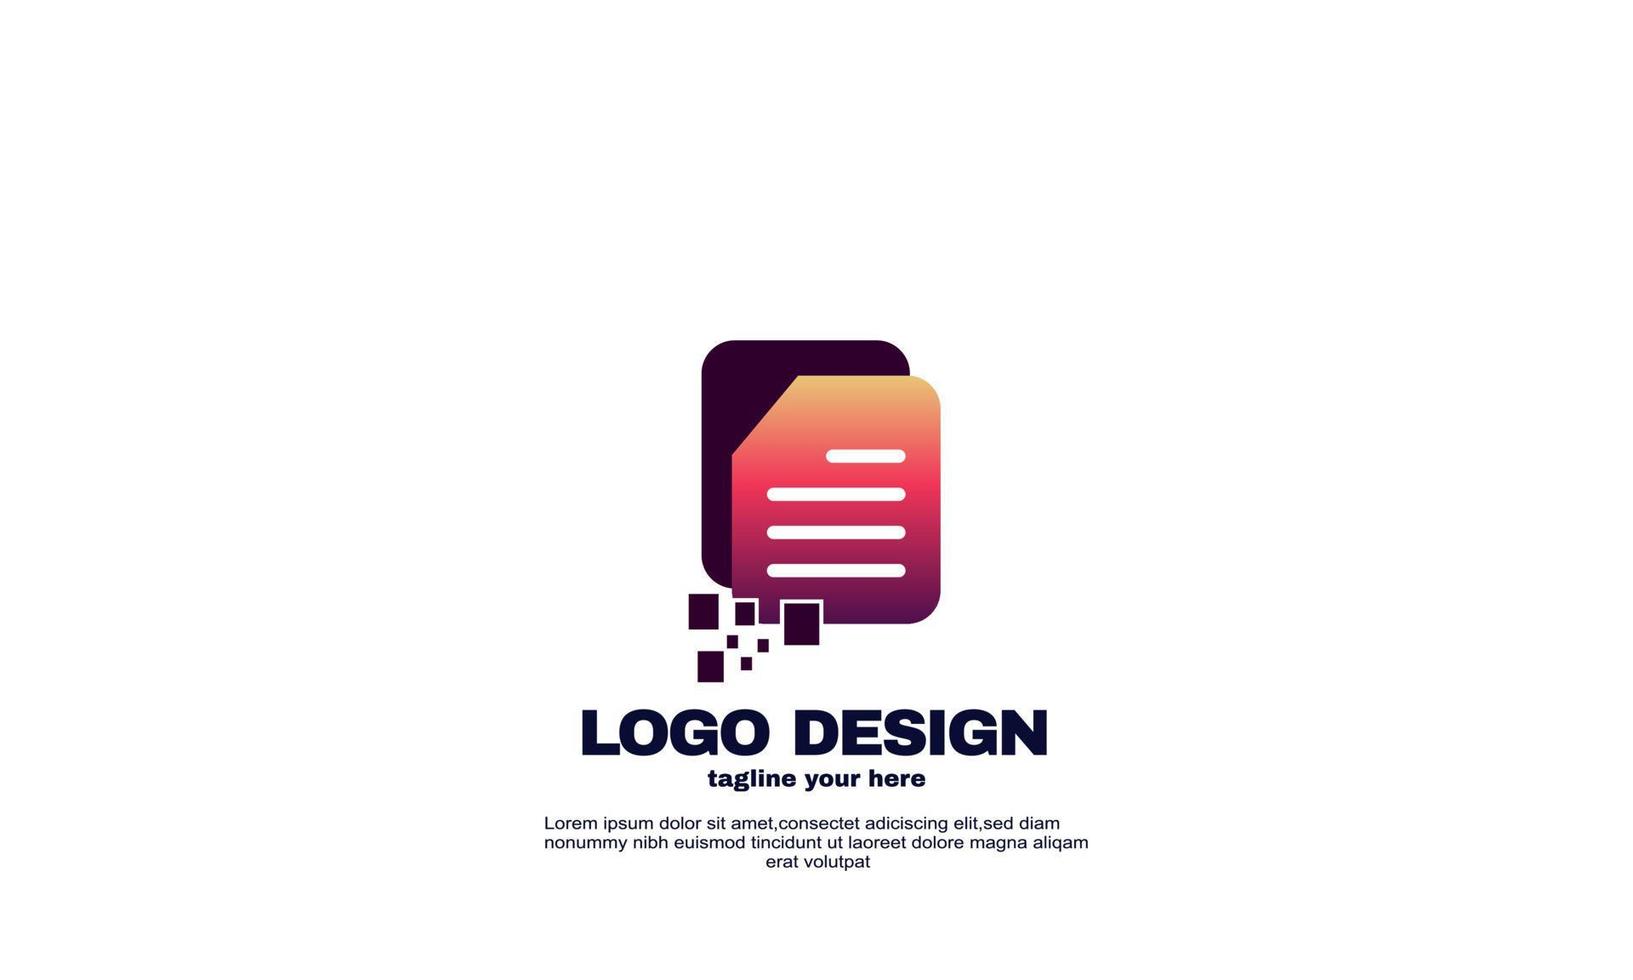 conceito de design de logotipo de documento digital de vetor incrível